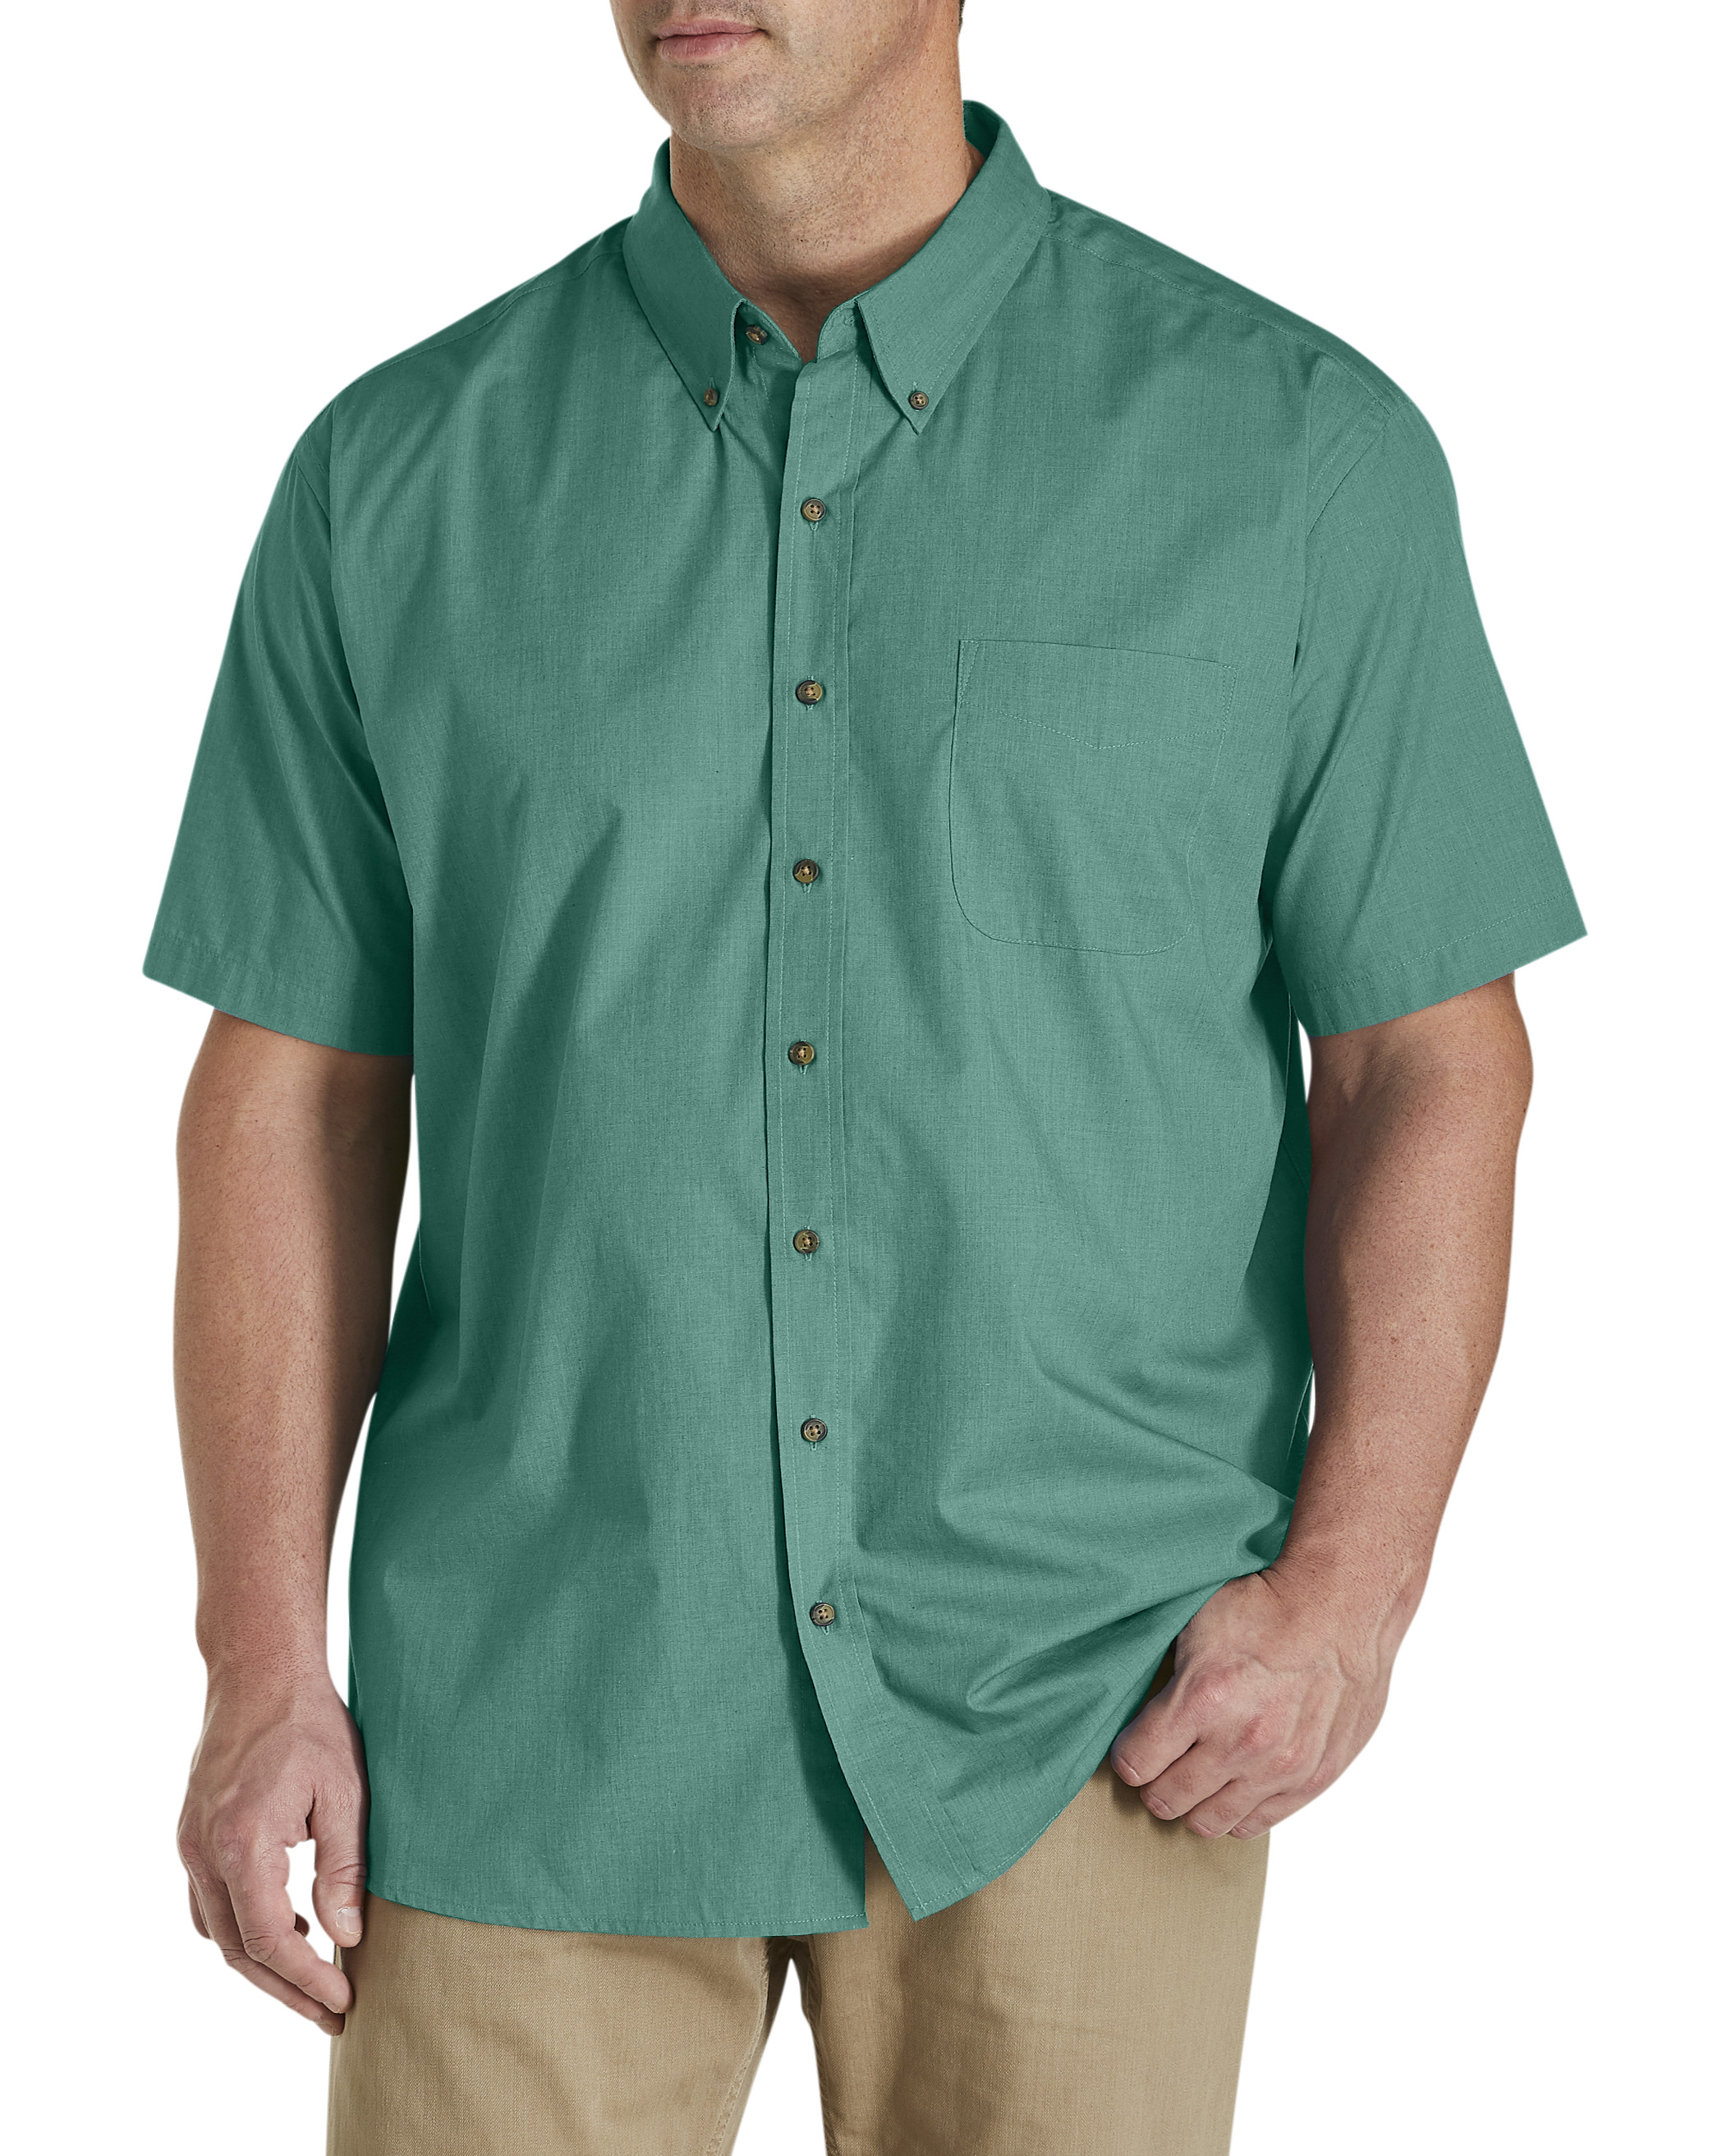 Big + Tall, Harbor Bay Shapewear Crewneck T-Shirt